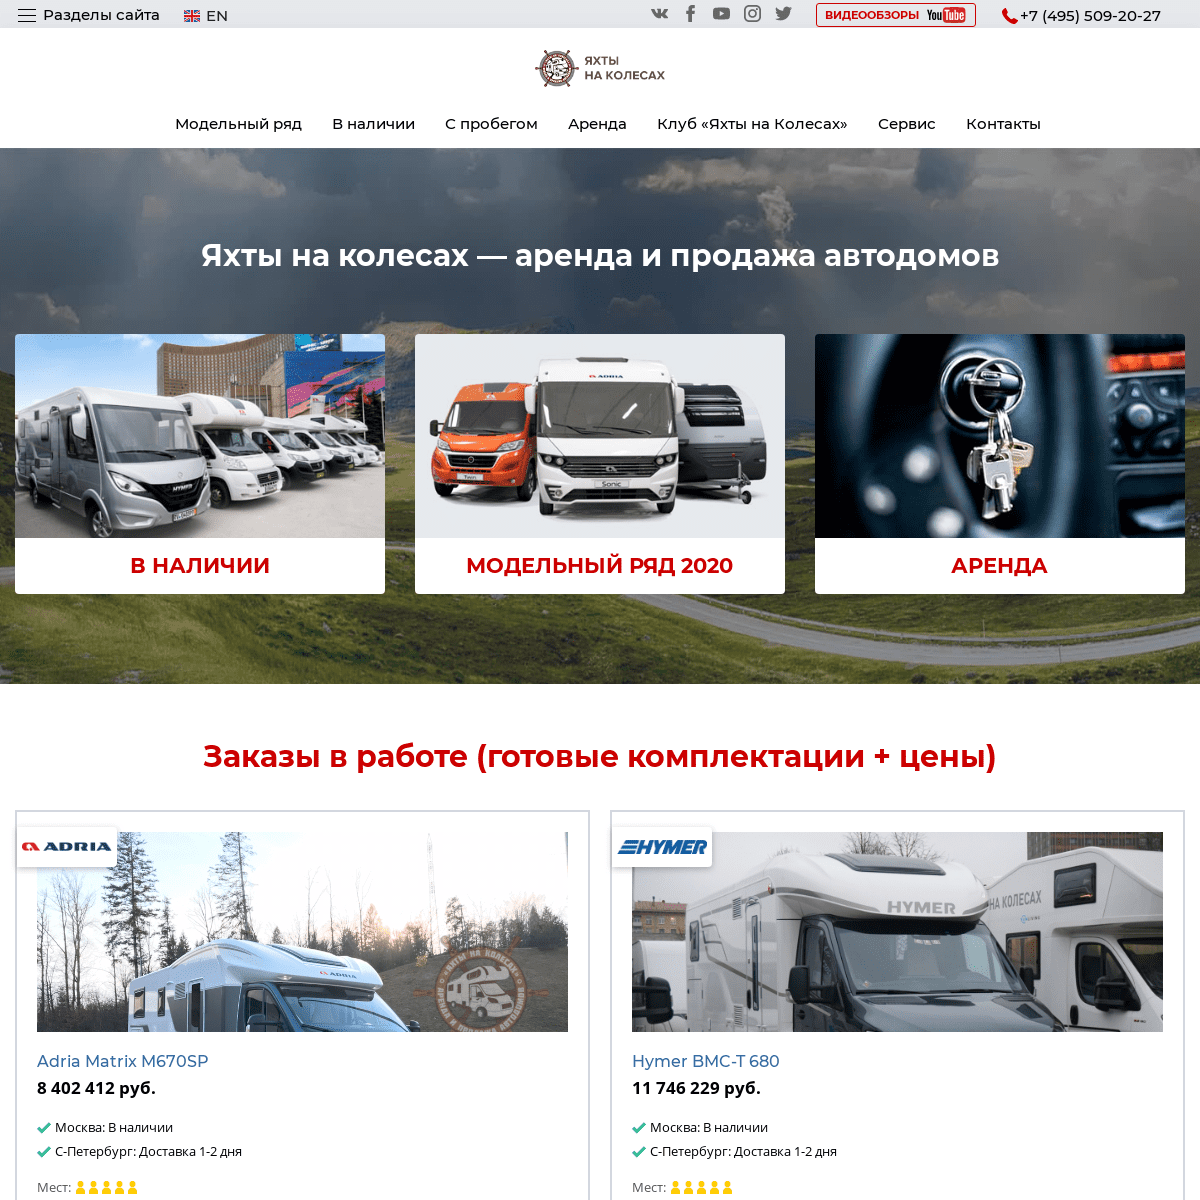 A complete backup of autoyahta.ru